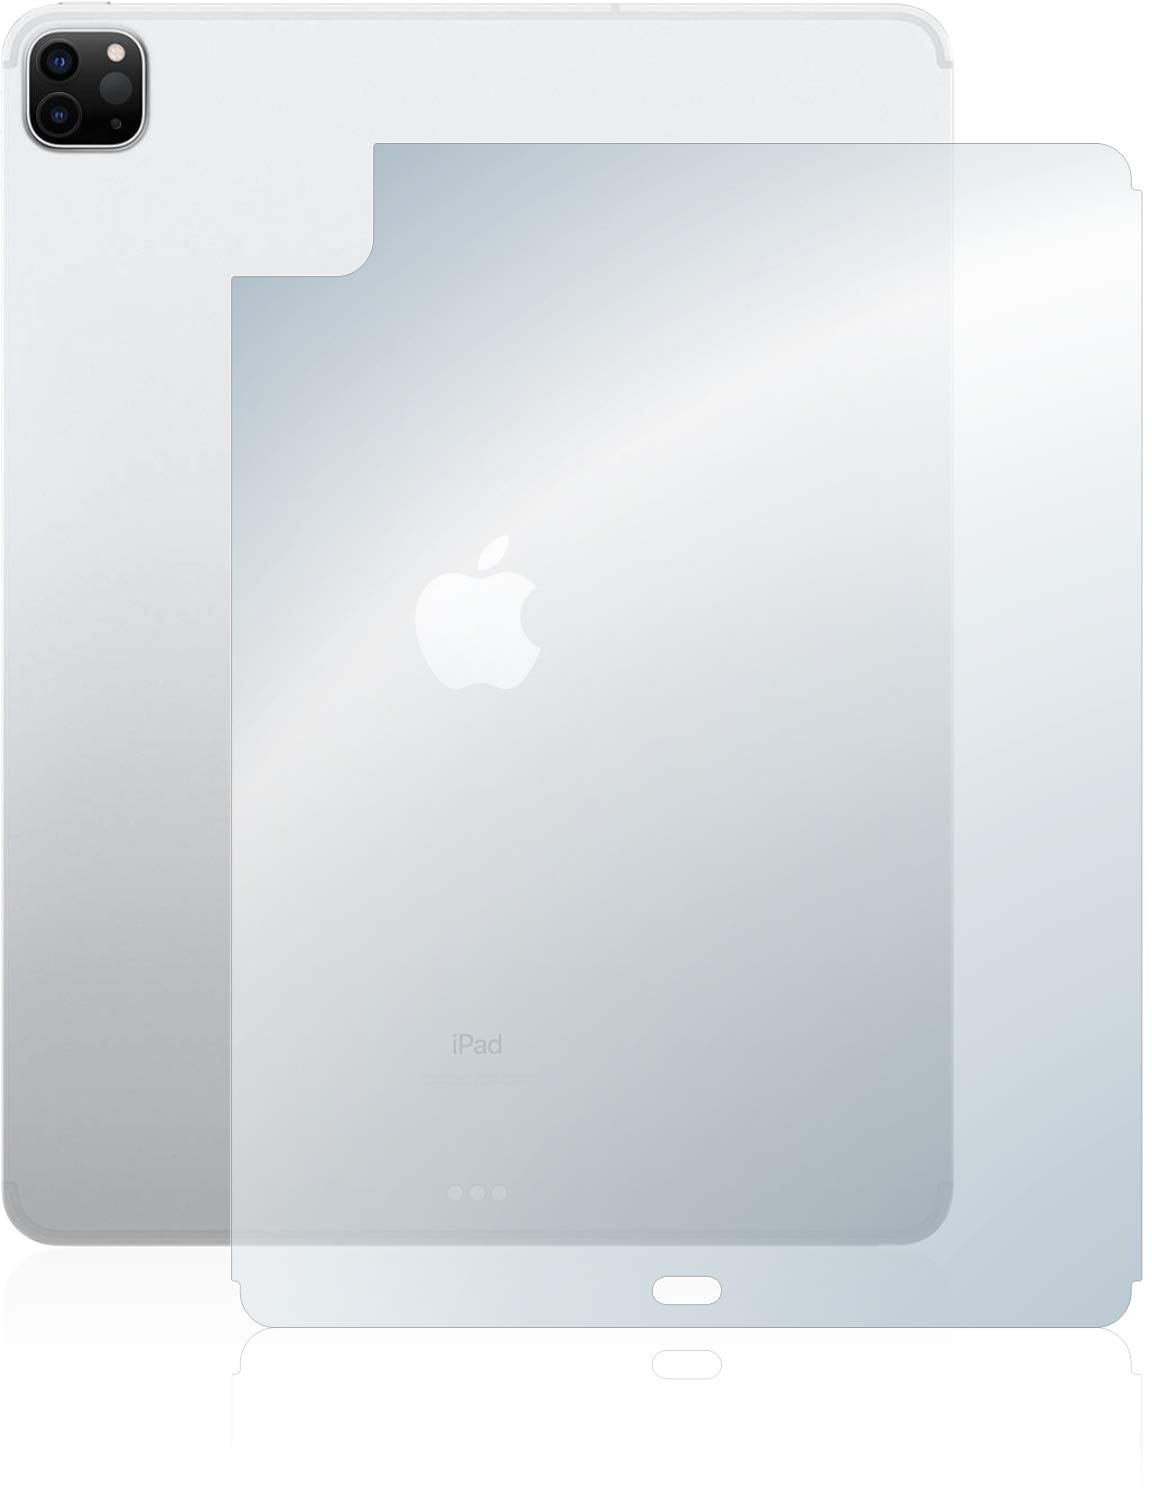 upscreen Schutzfolie für Apple iPad Pro 12.9" WiFi 2020 (Rückseite, 4. Gen.) – Kristall-klar, Kratzschutz, Anti-Fingerprint